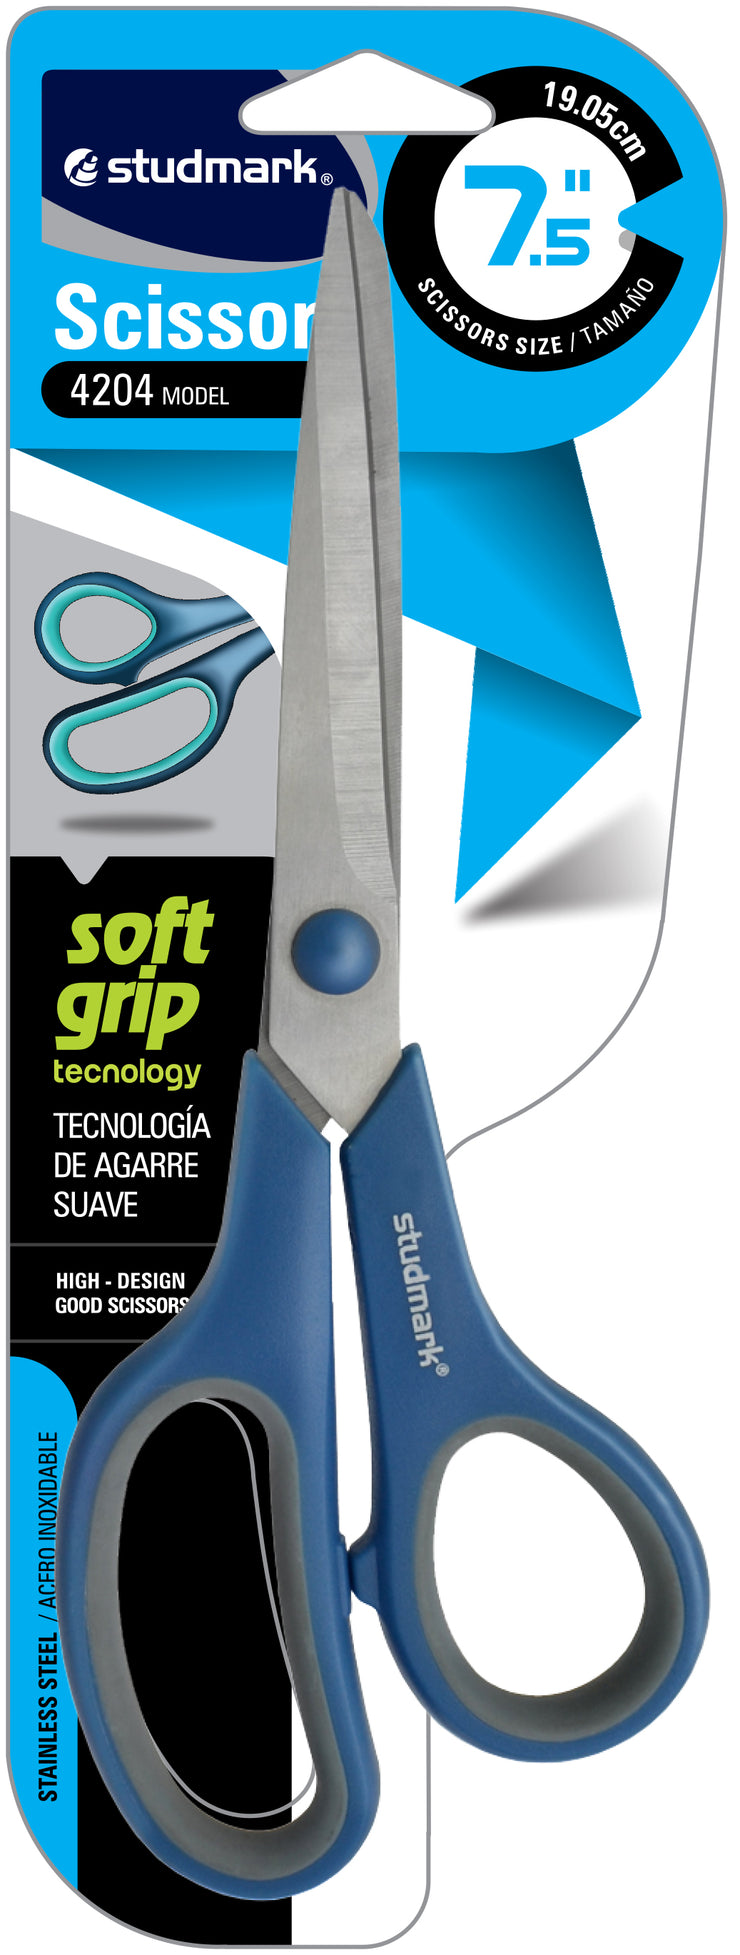 Studmark scissors 7.5"